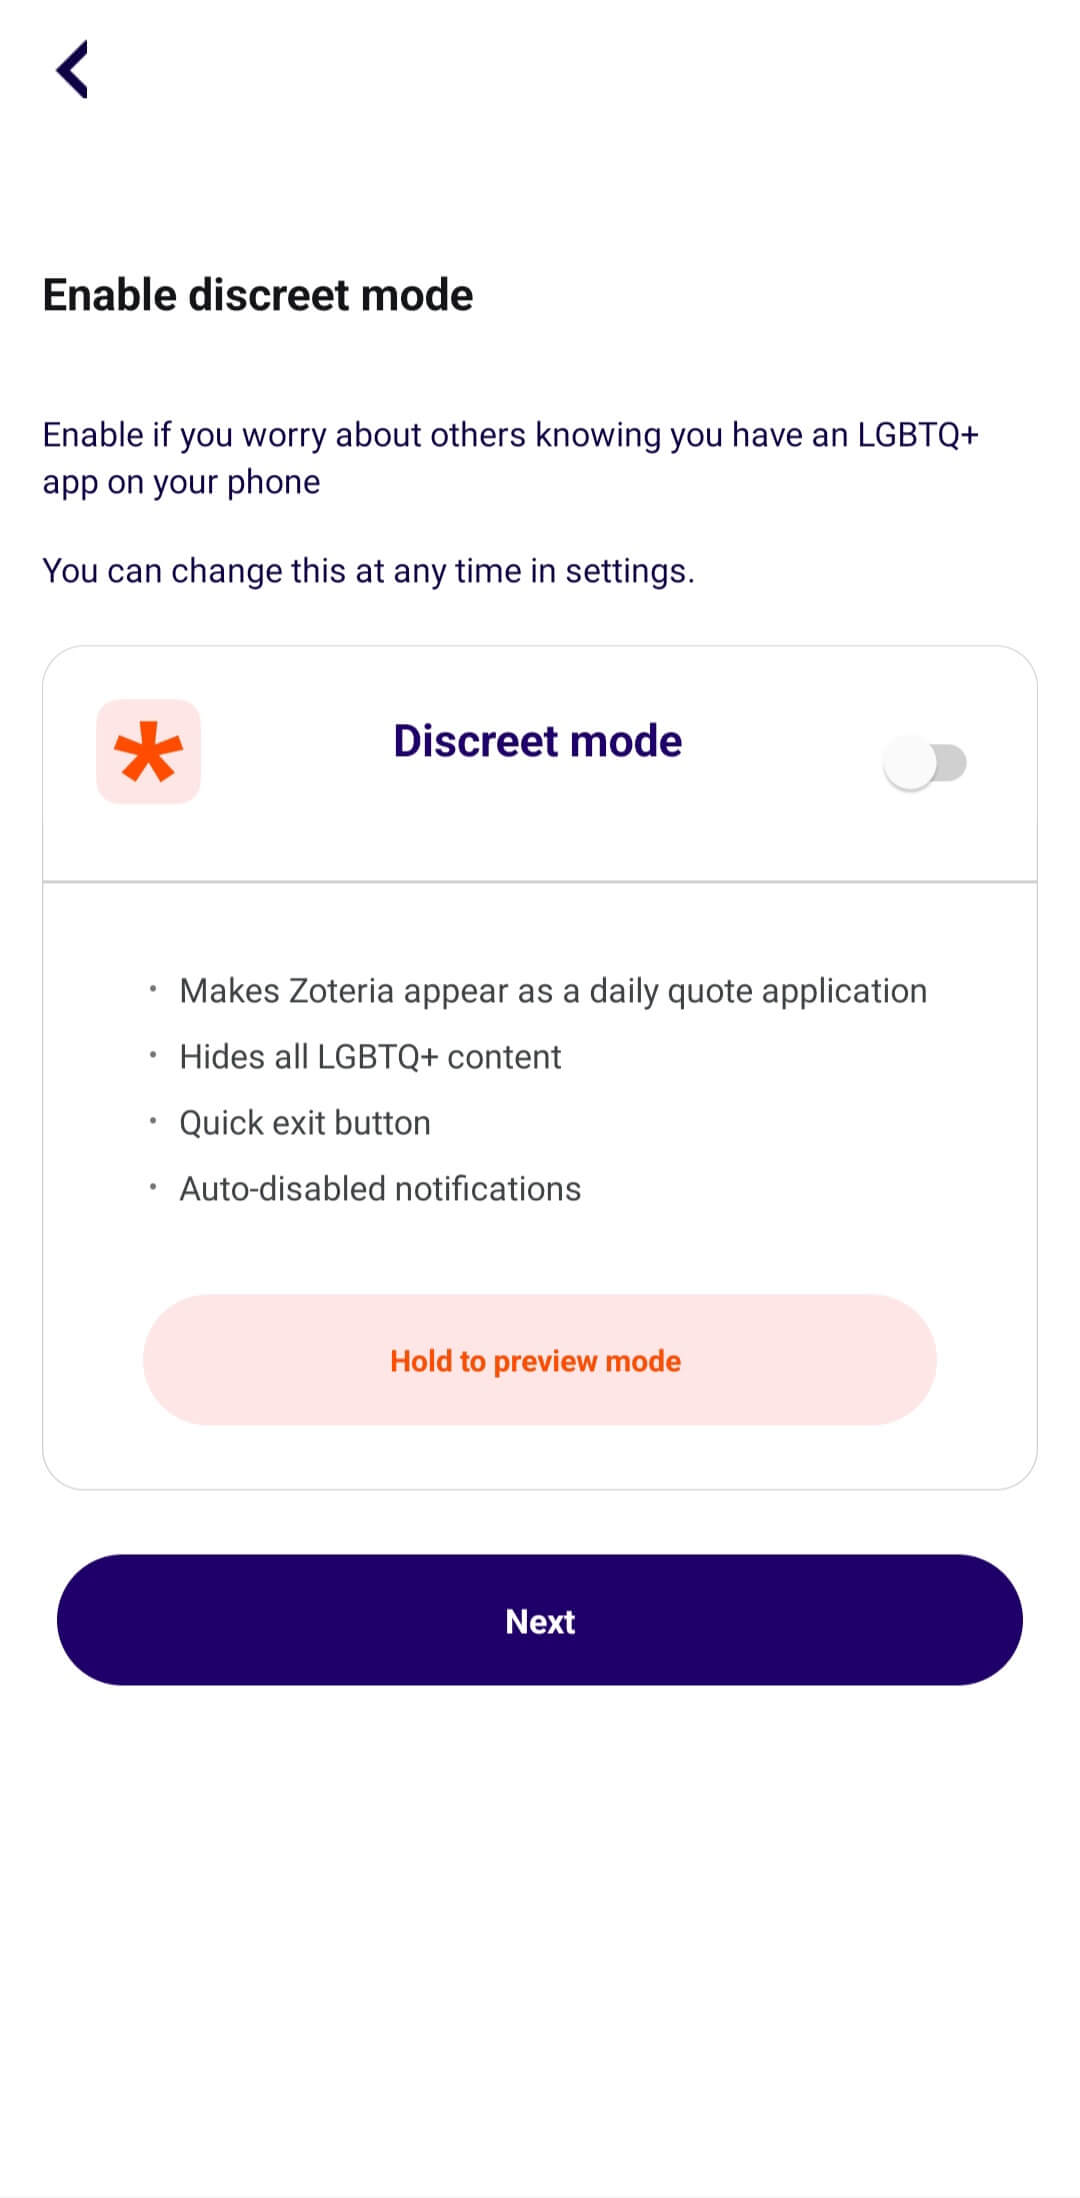 Zoteria Enable Discreet Mode l Zoteria App l Launched by Galop, Stonewall and Vodafone Foundation l App Creator Marta Lima l LGBTQ+ Hate Crimes UK l LGBTQ Wellness